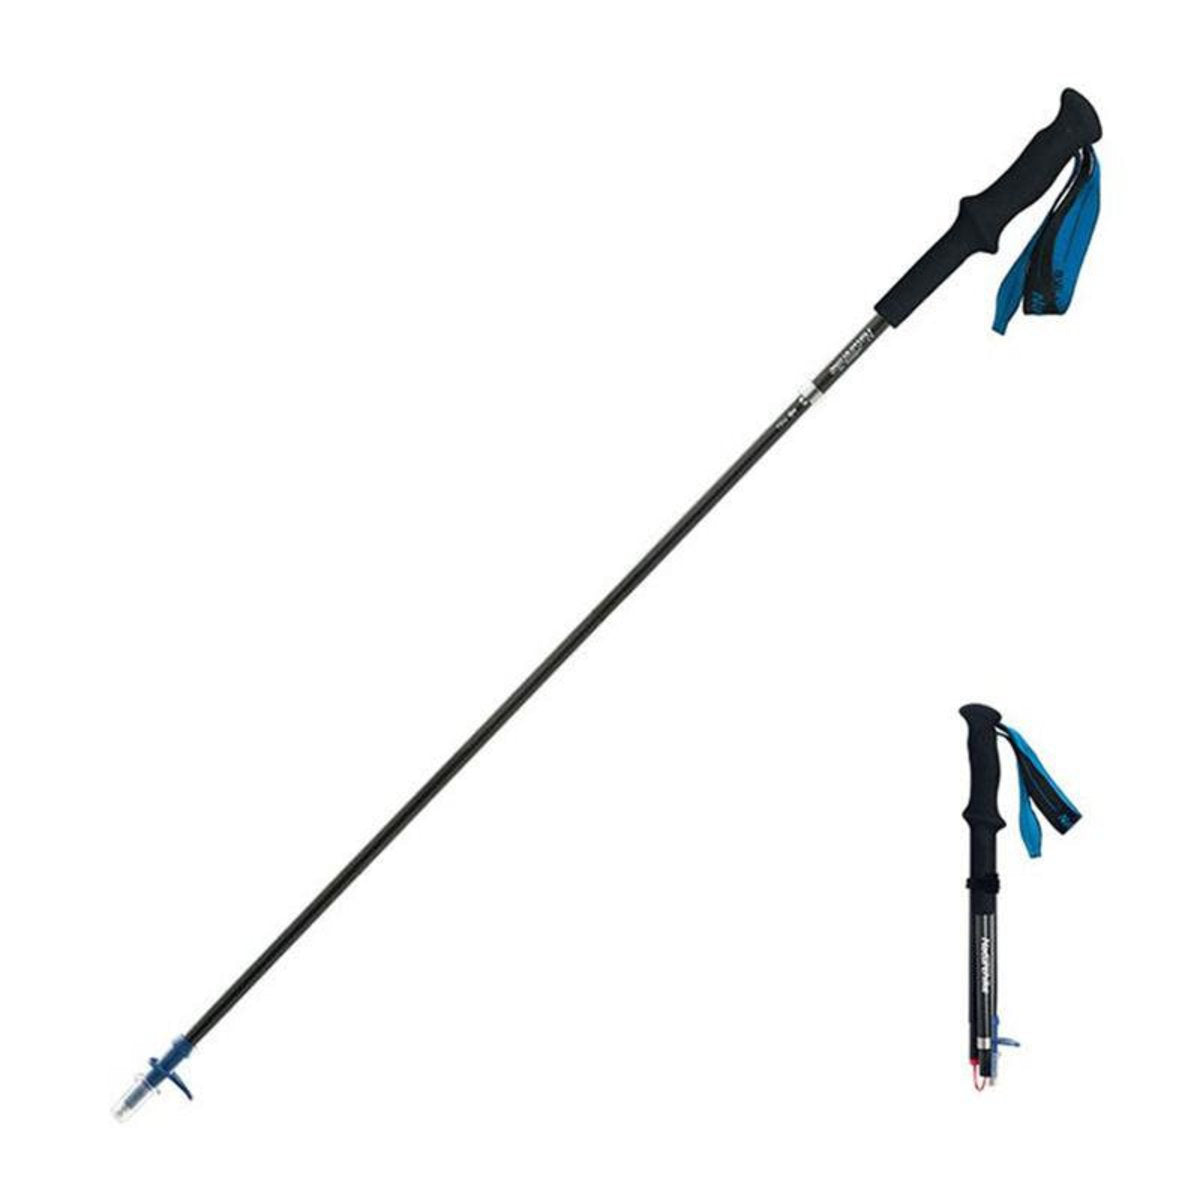 Naturehike - ST08 lightweight carbon fiber 4-section Z hiking pole (110cm) - Purple